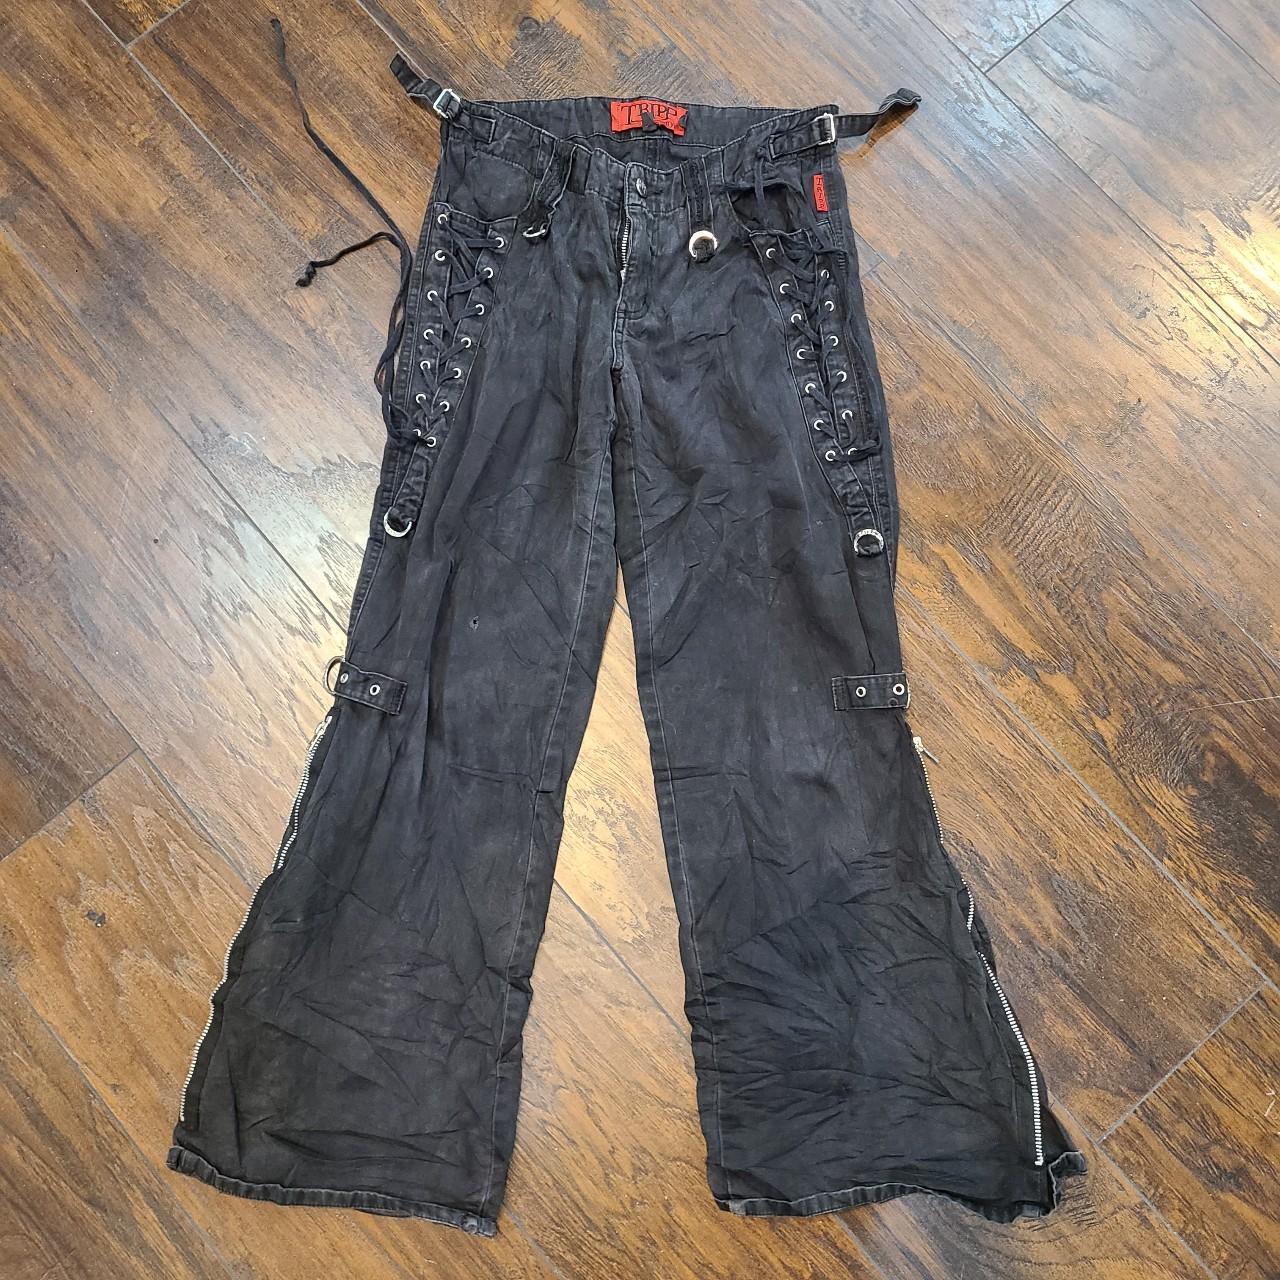 Wide PUNK RAVE Gothic bondage trousers